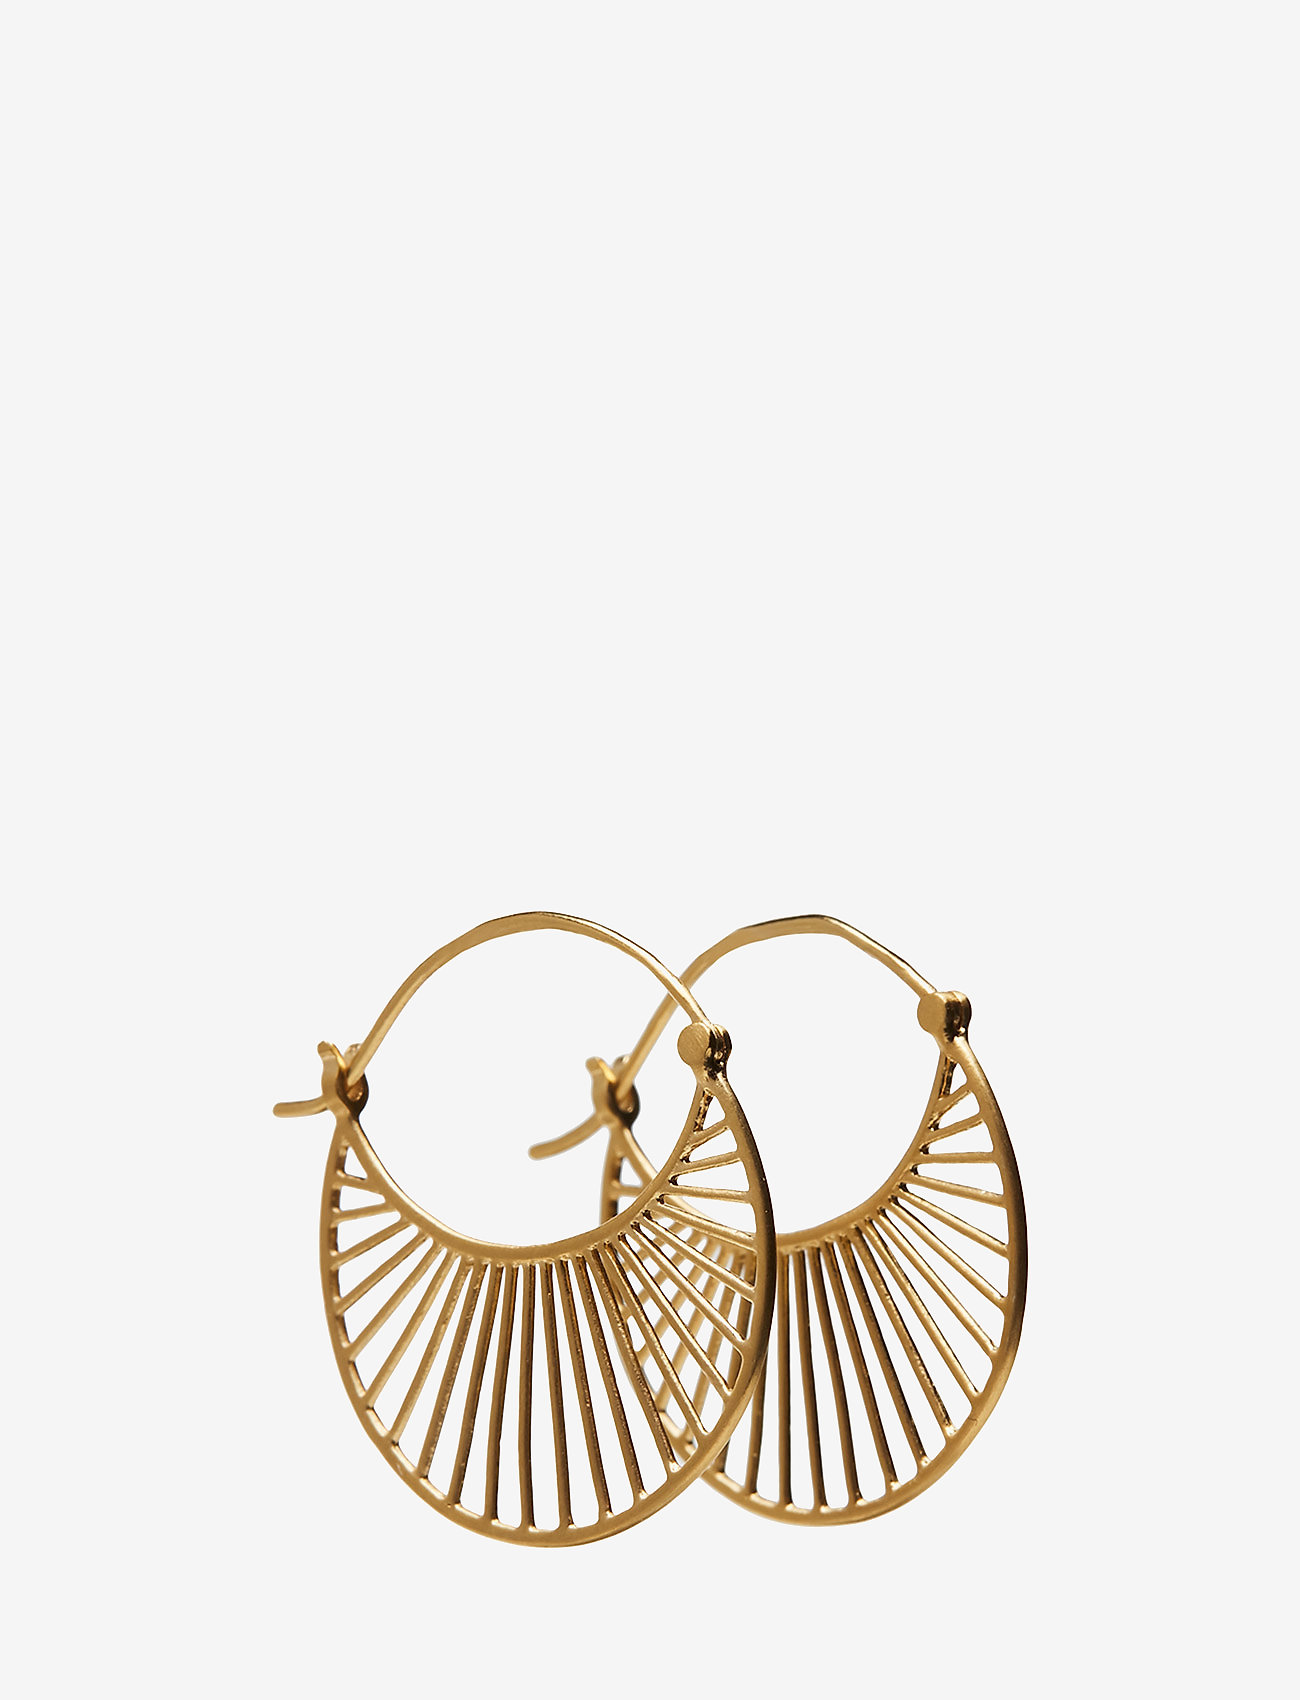 Pernille Corydon - Large Daylight Earrings 30 mm - hoops - gold plated - 1